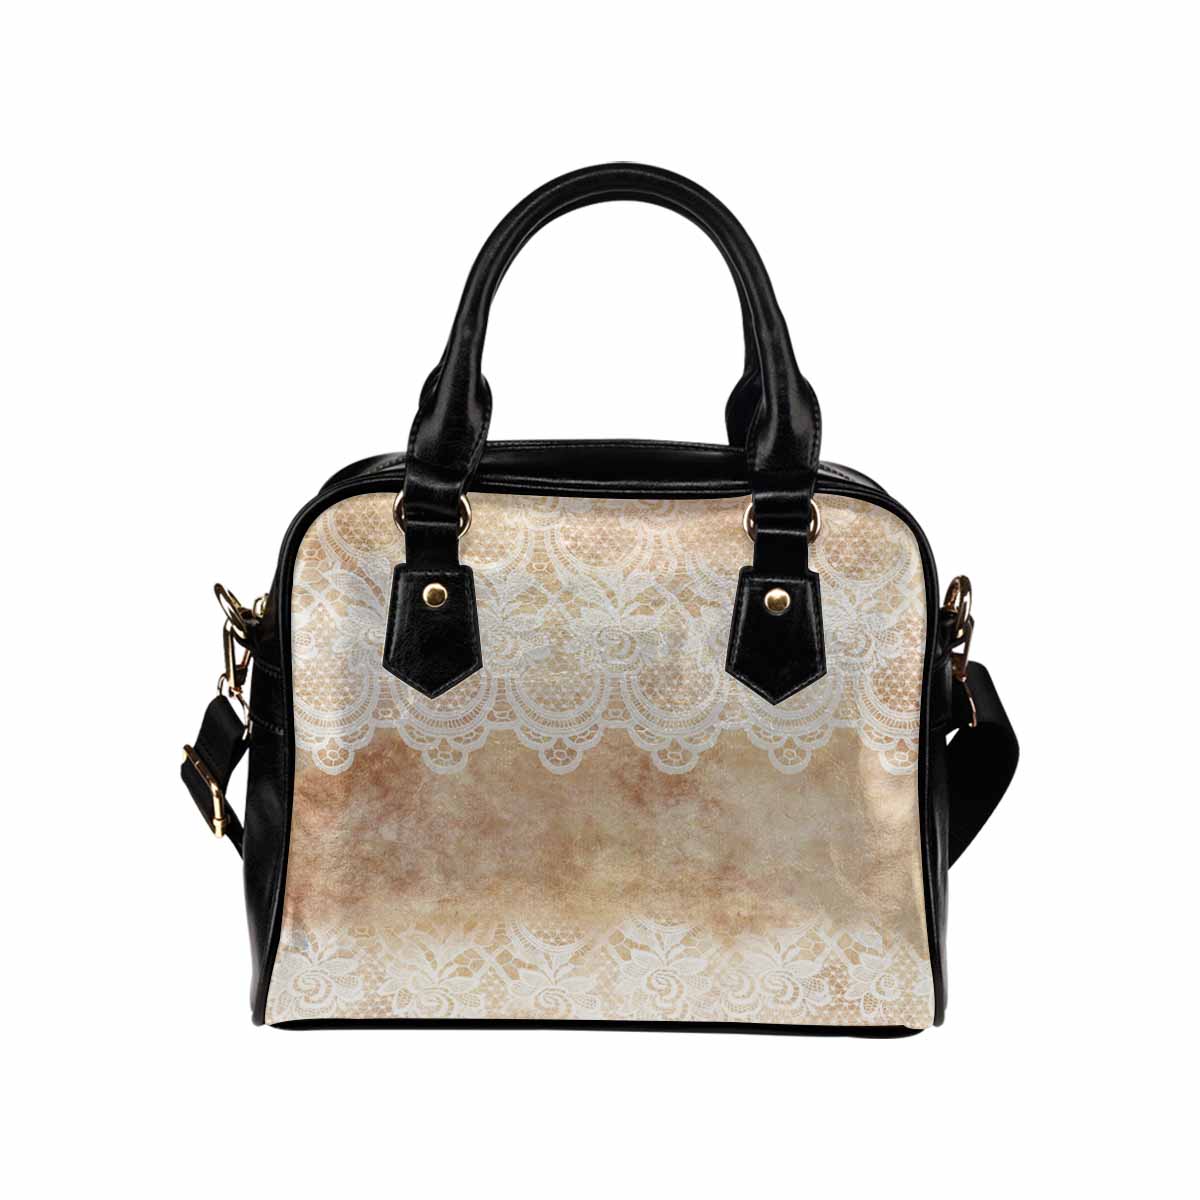 Victorian lace print, cute handbag, Mod 19163453, design 30